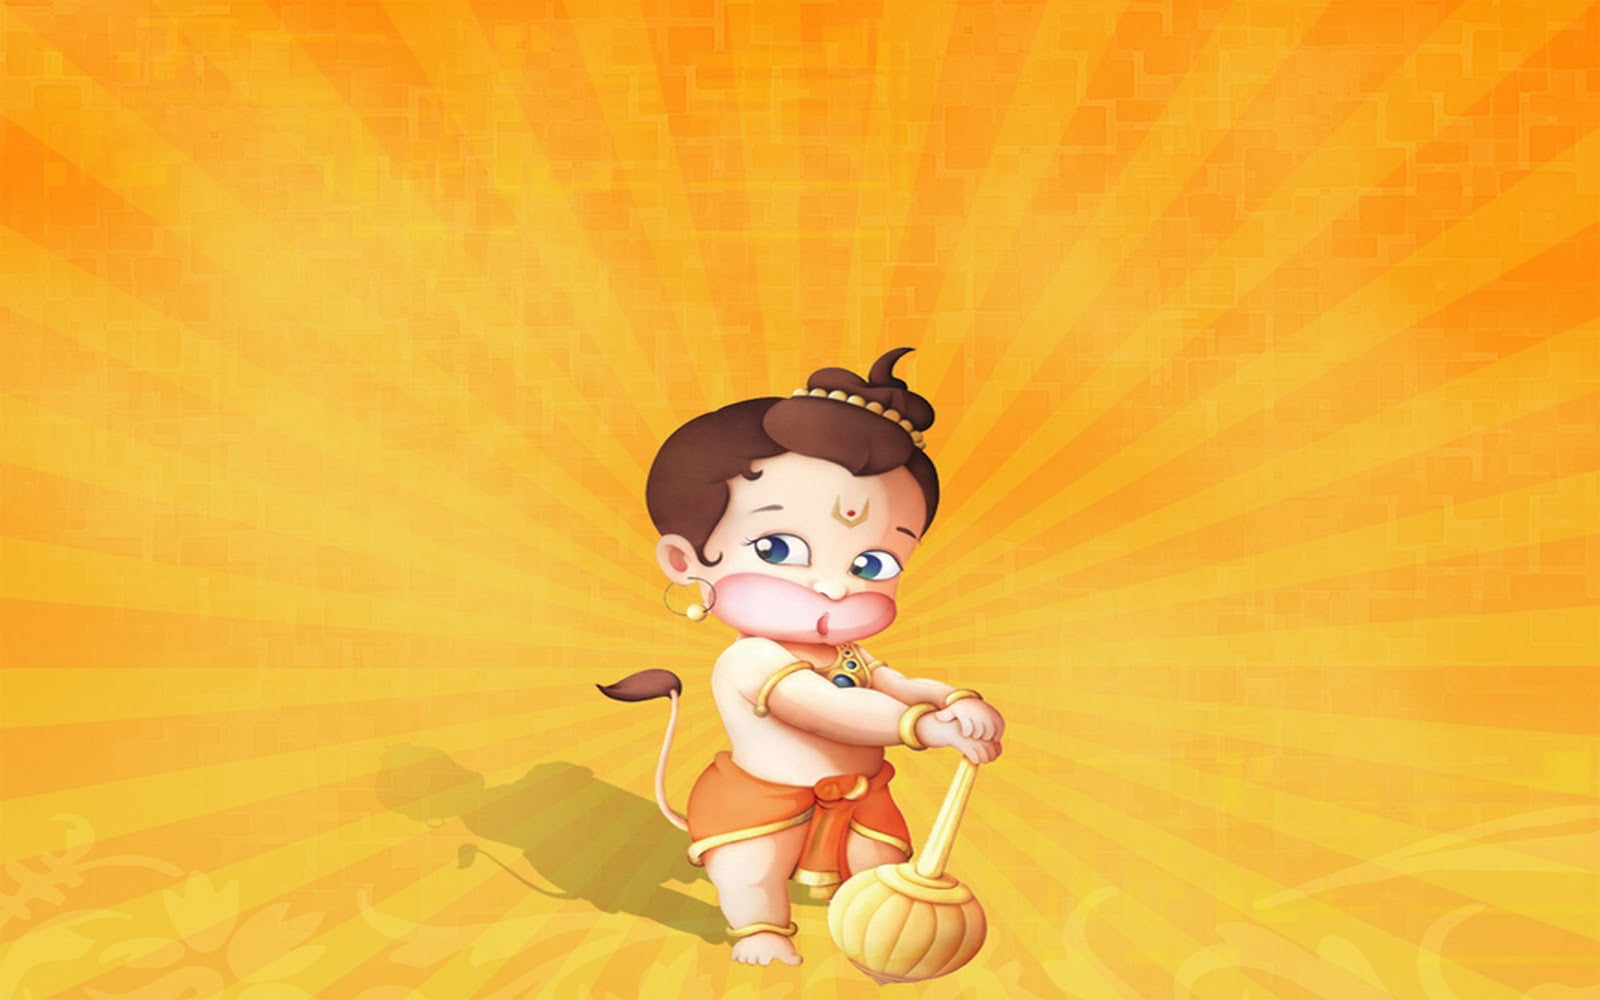 Jai Hanuman, Hanuman illustration, God, Lord Hanuman, representation